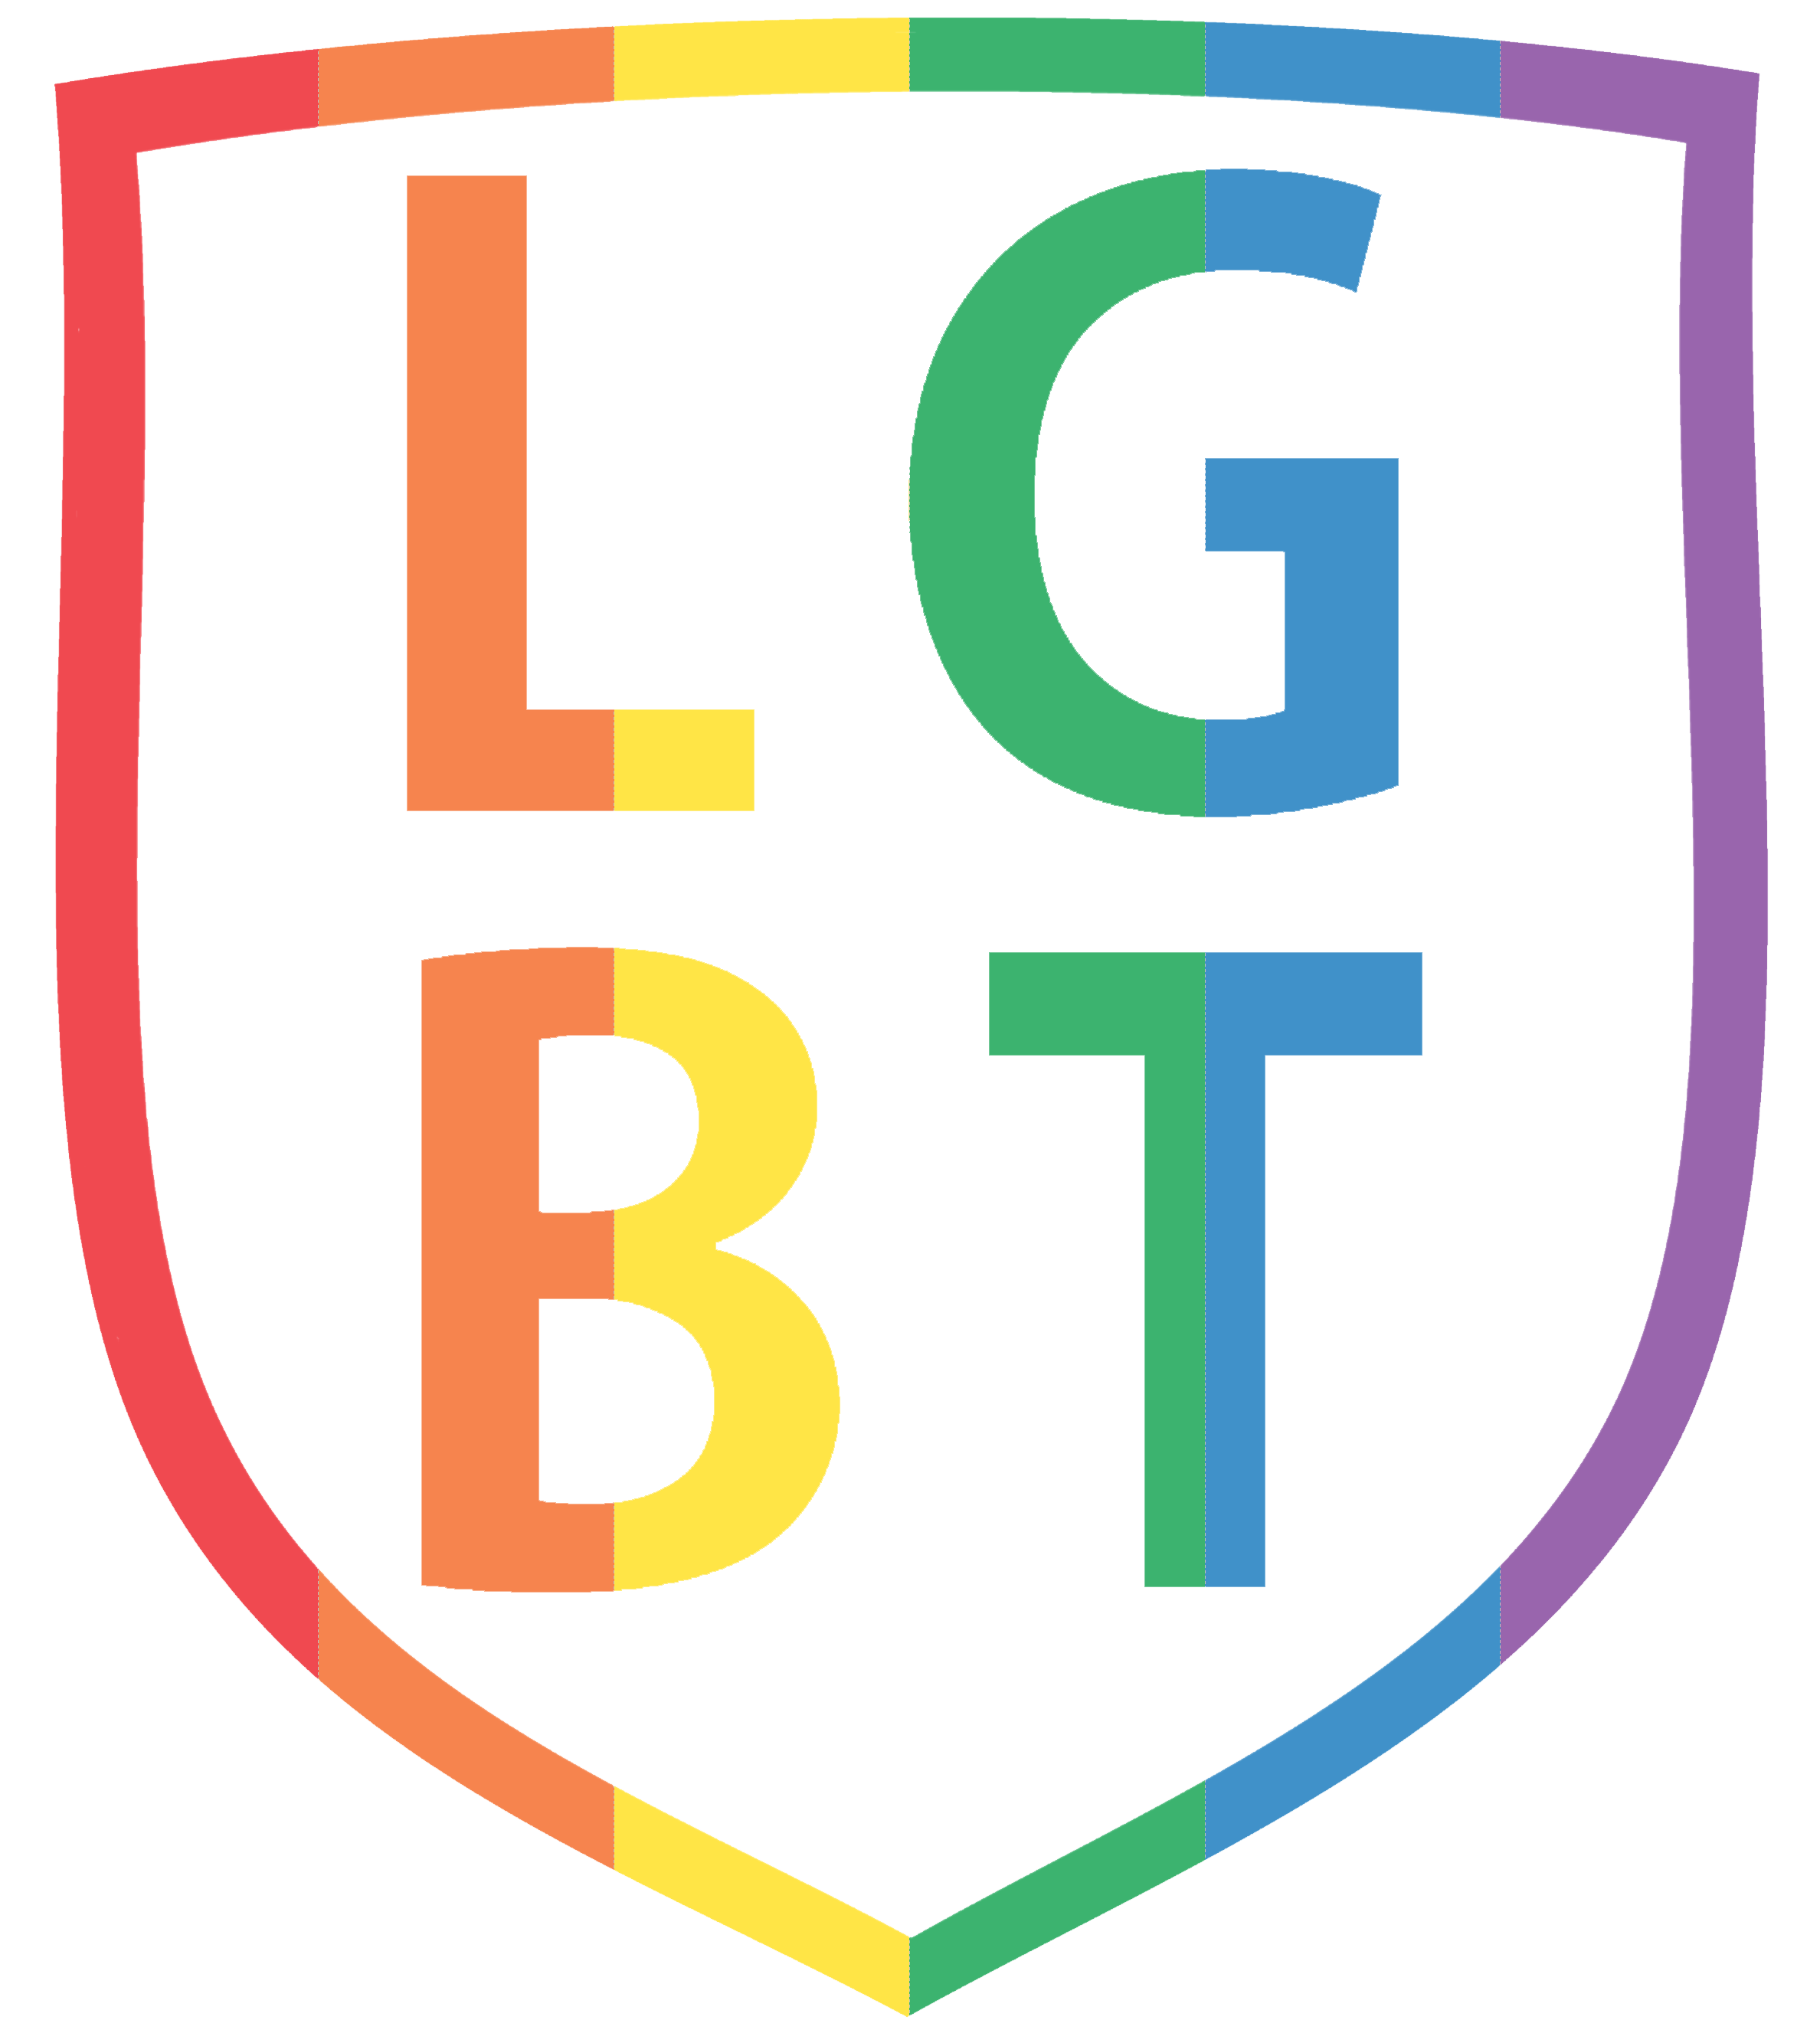 LGBTQ Logo - Lgbtq Clip Art Logo Png Image